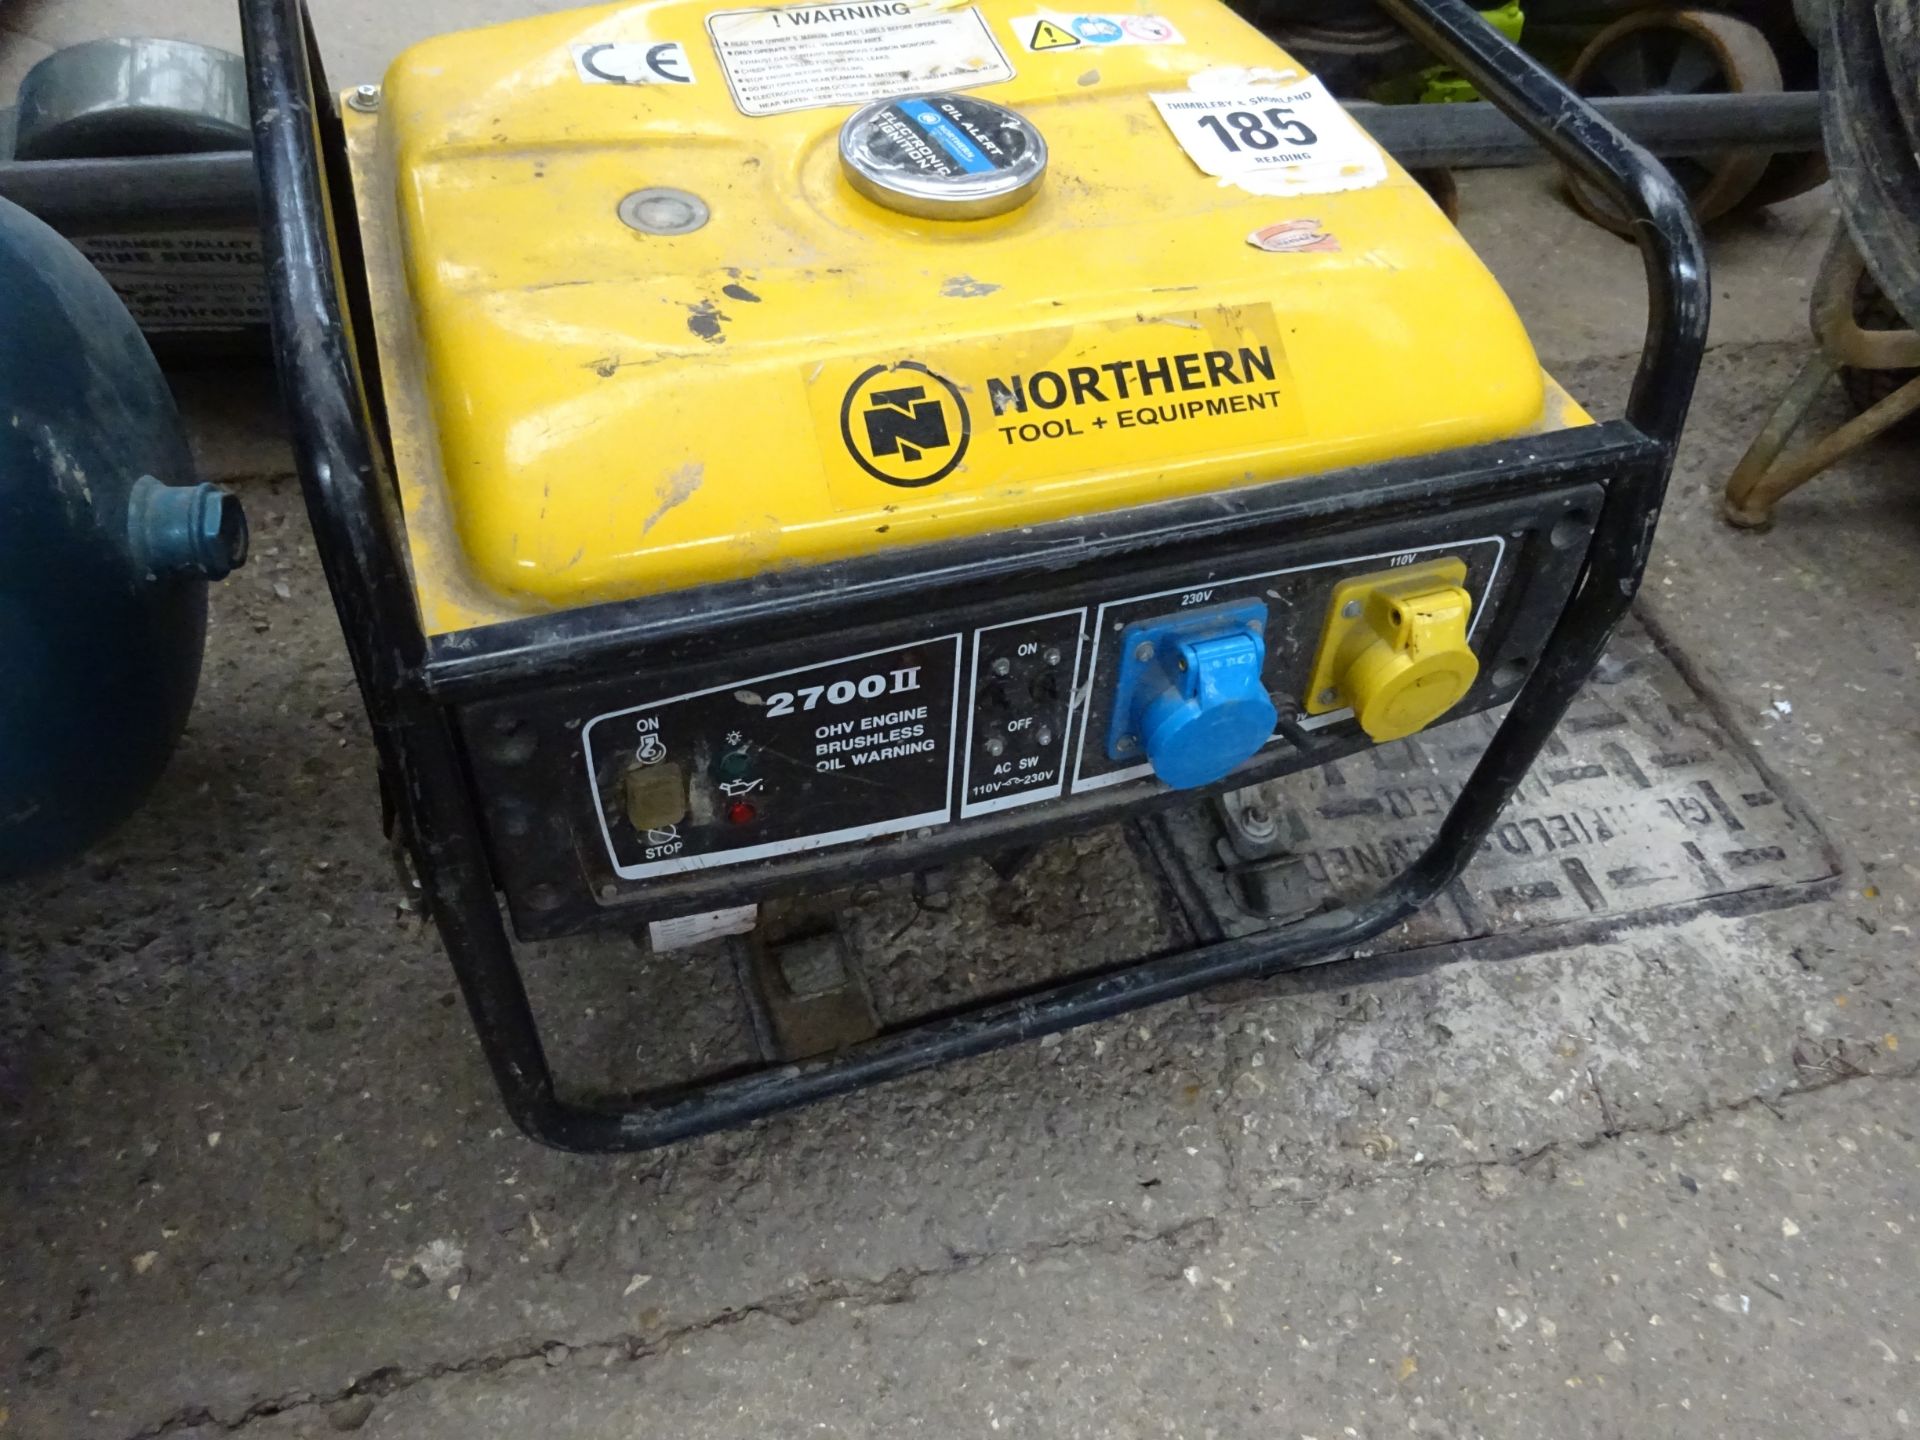 Petrol 2700II generator